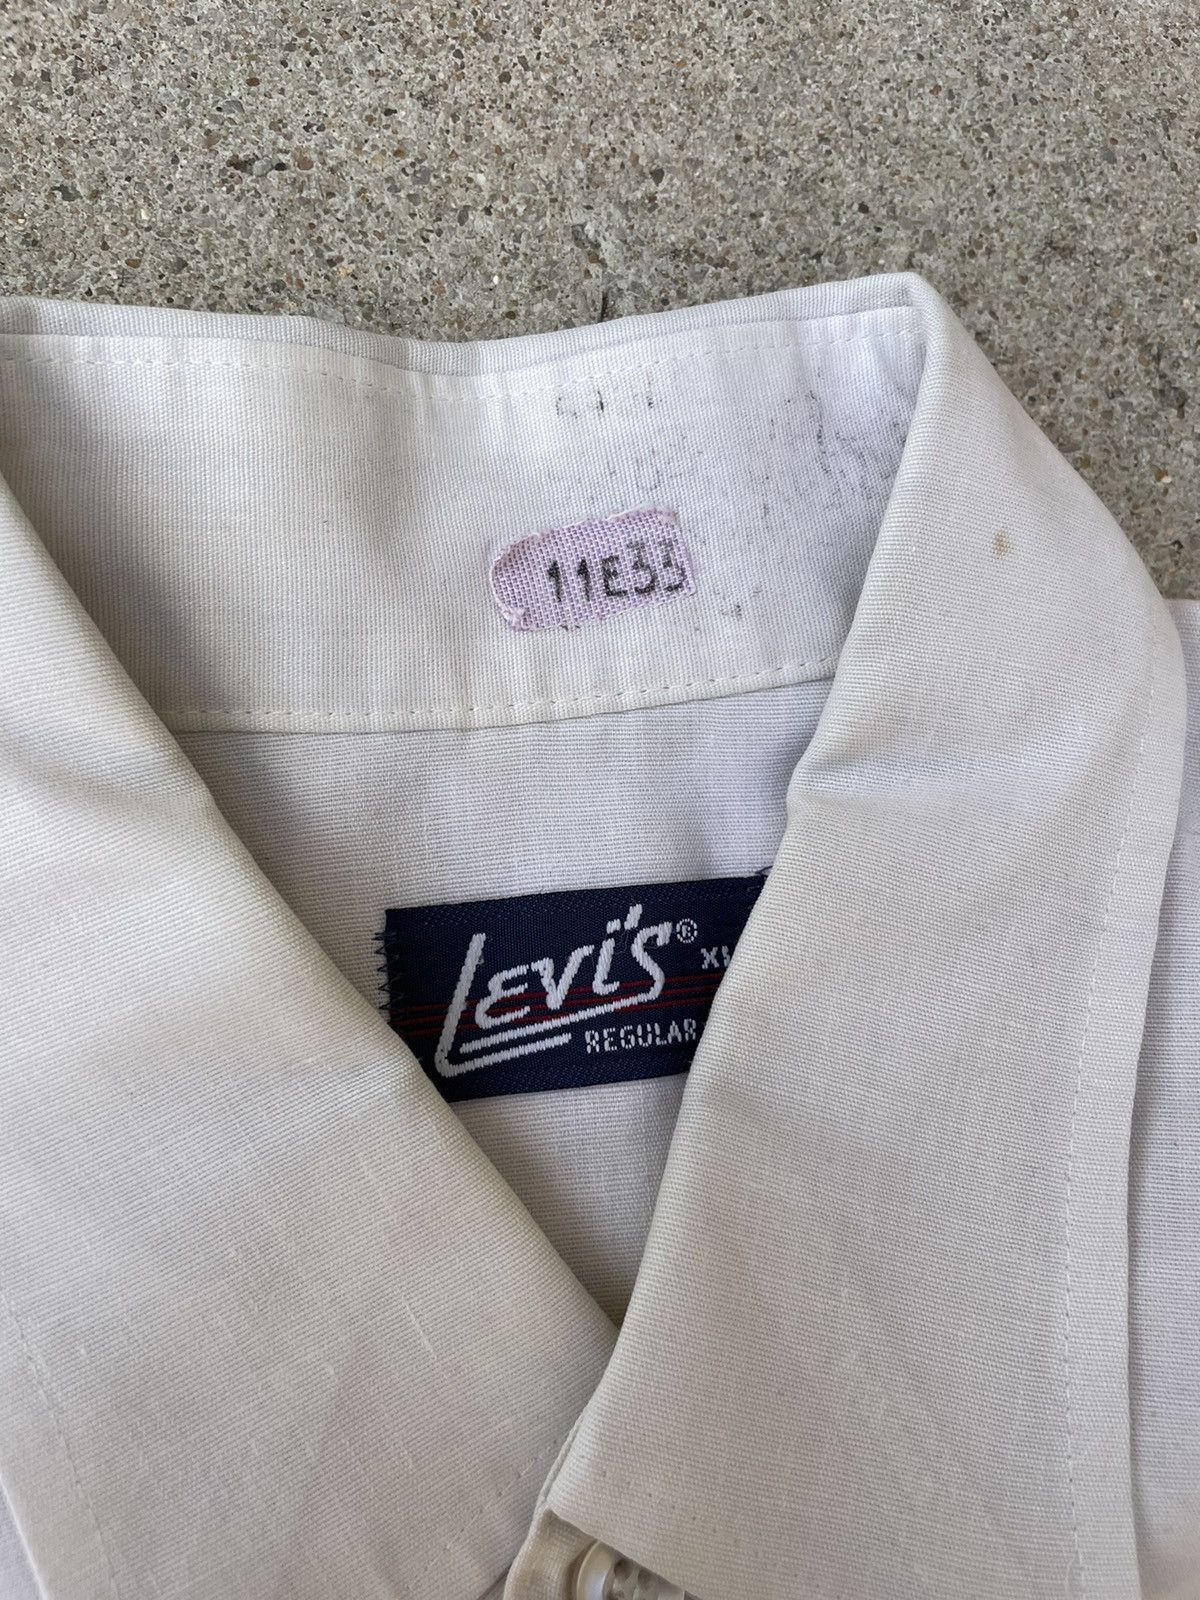 Vintage Vtg 80s Levis White Tab Western Pearl Snap Buttoned Shirt XL Size US XL / EU 56 / 4 - 7 Thumbnail